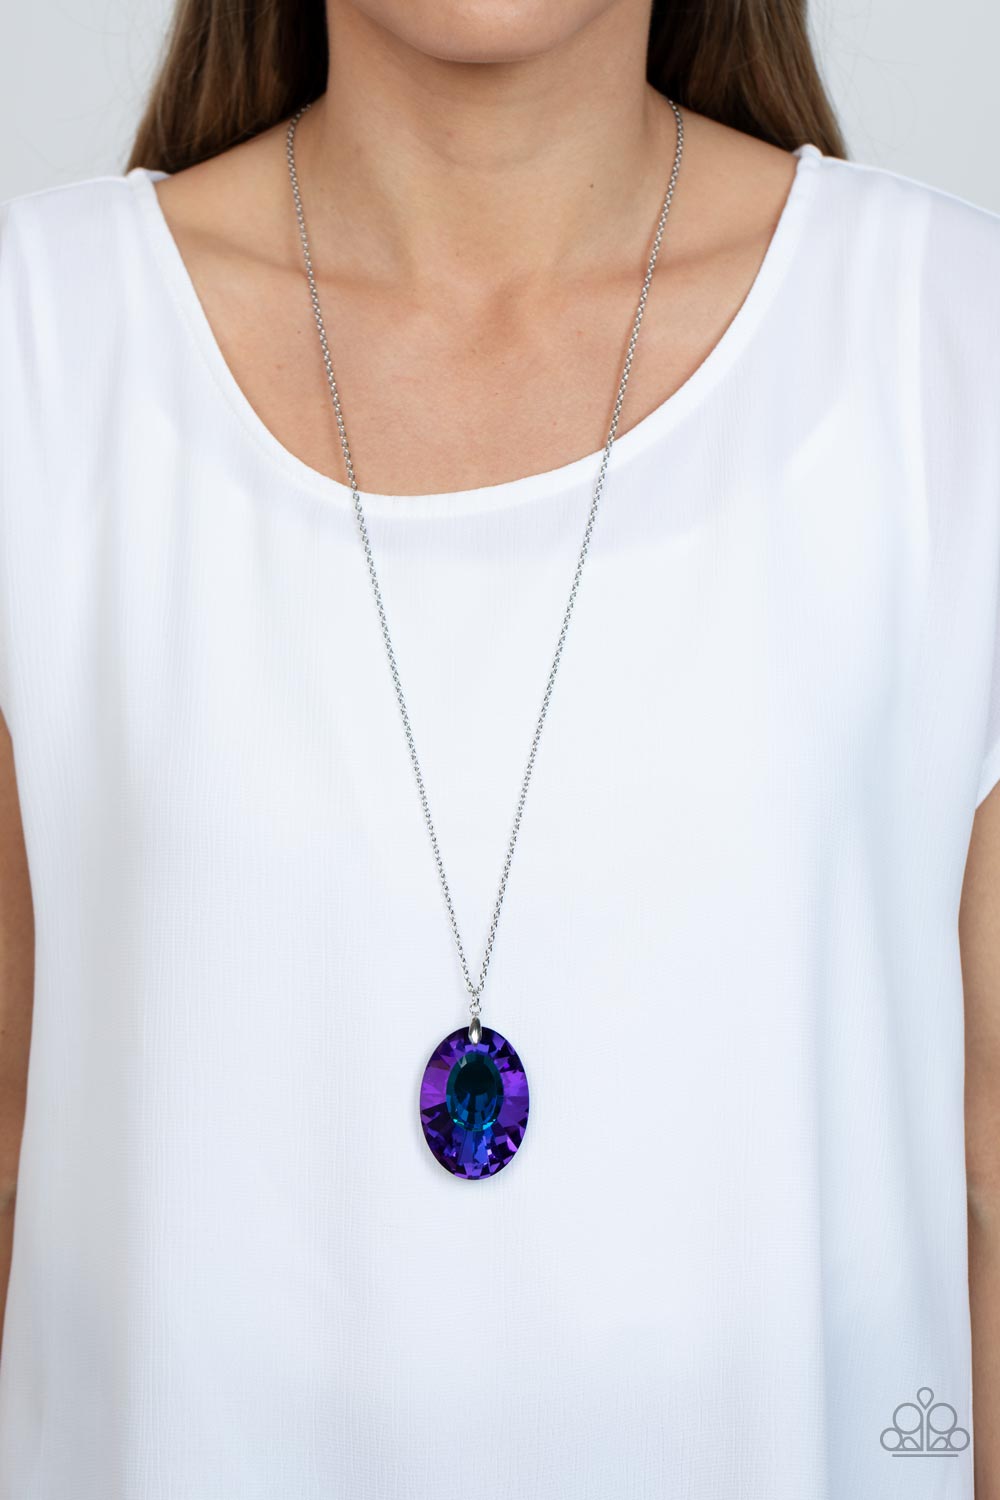 Celestial Essence Blue Iridescent Rhinestone Necklace - Paparazzi Accessories-on model - CarasShop.com - $5 Jewelry by Cara Jewels